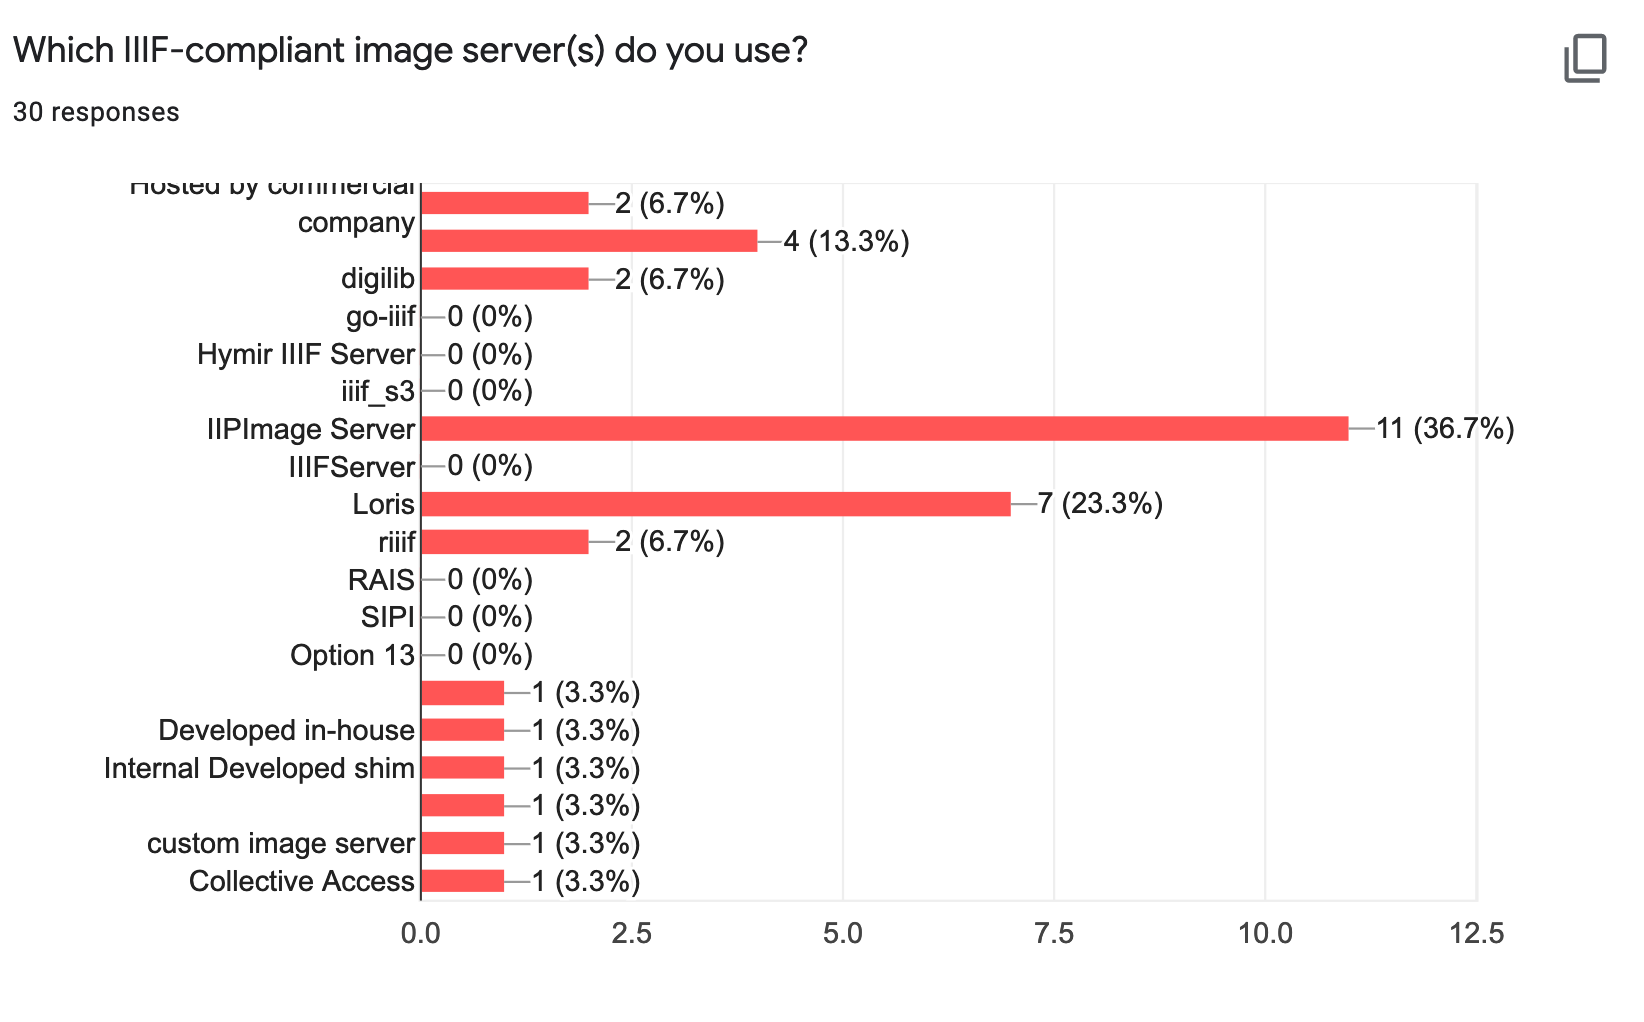 Use of image servers